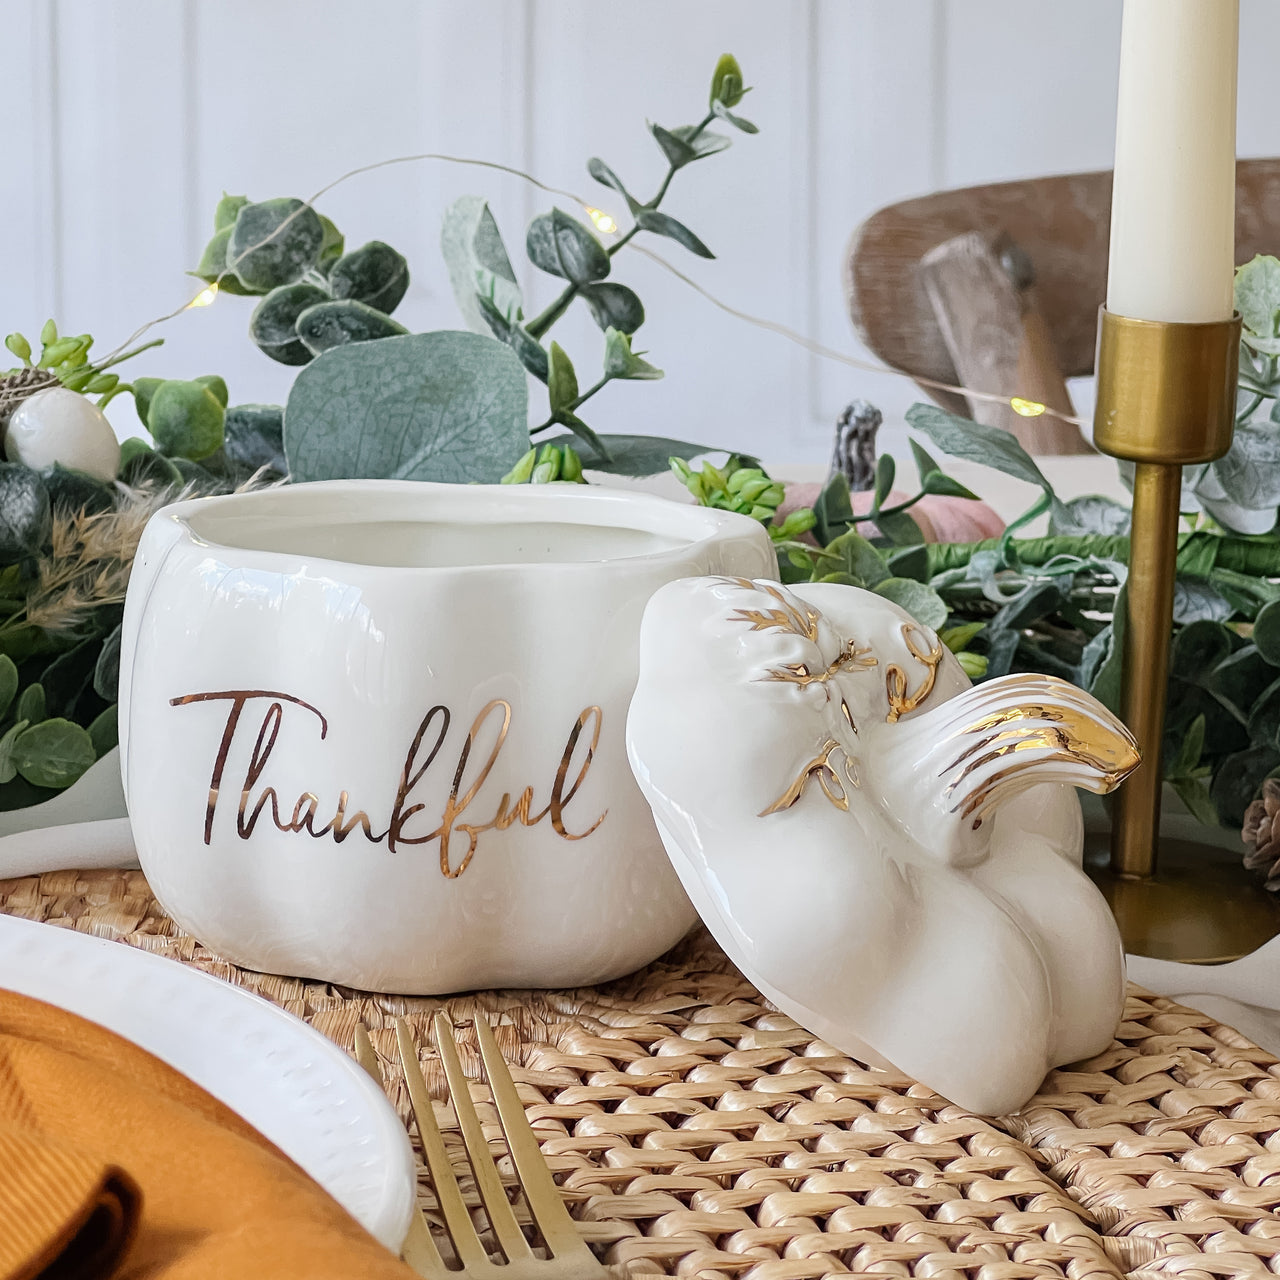 Thankful White Pumpkin Decorative Bowl - Alternate Image 2 | My Wedding Favors